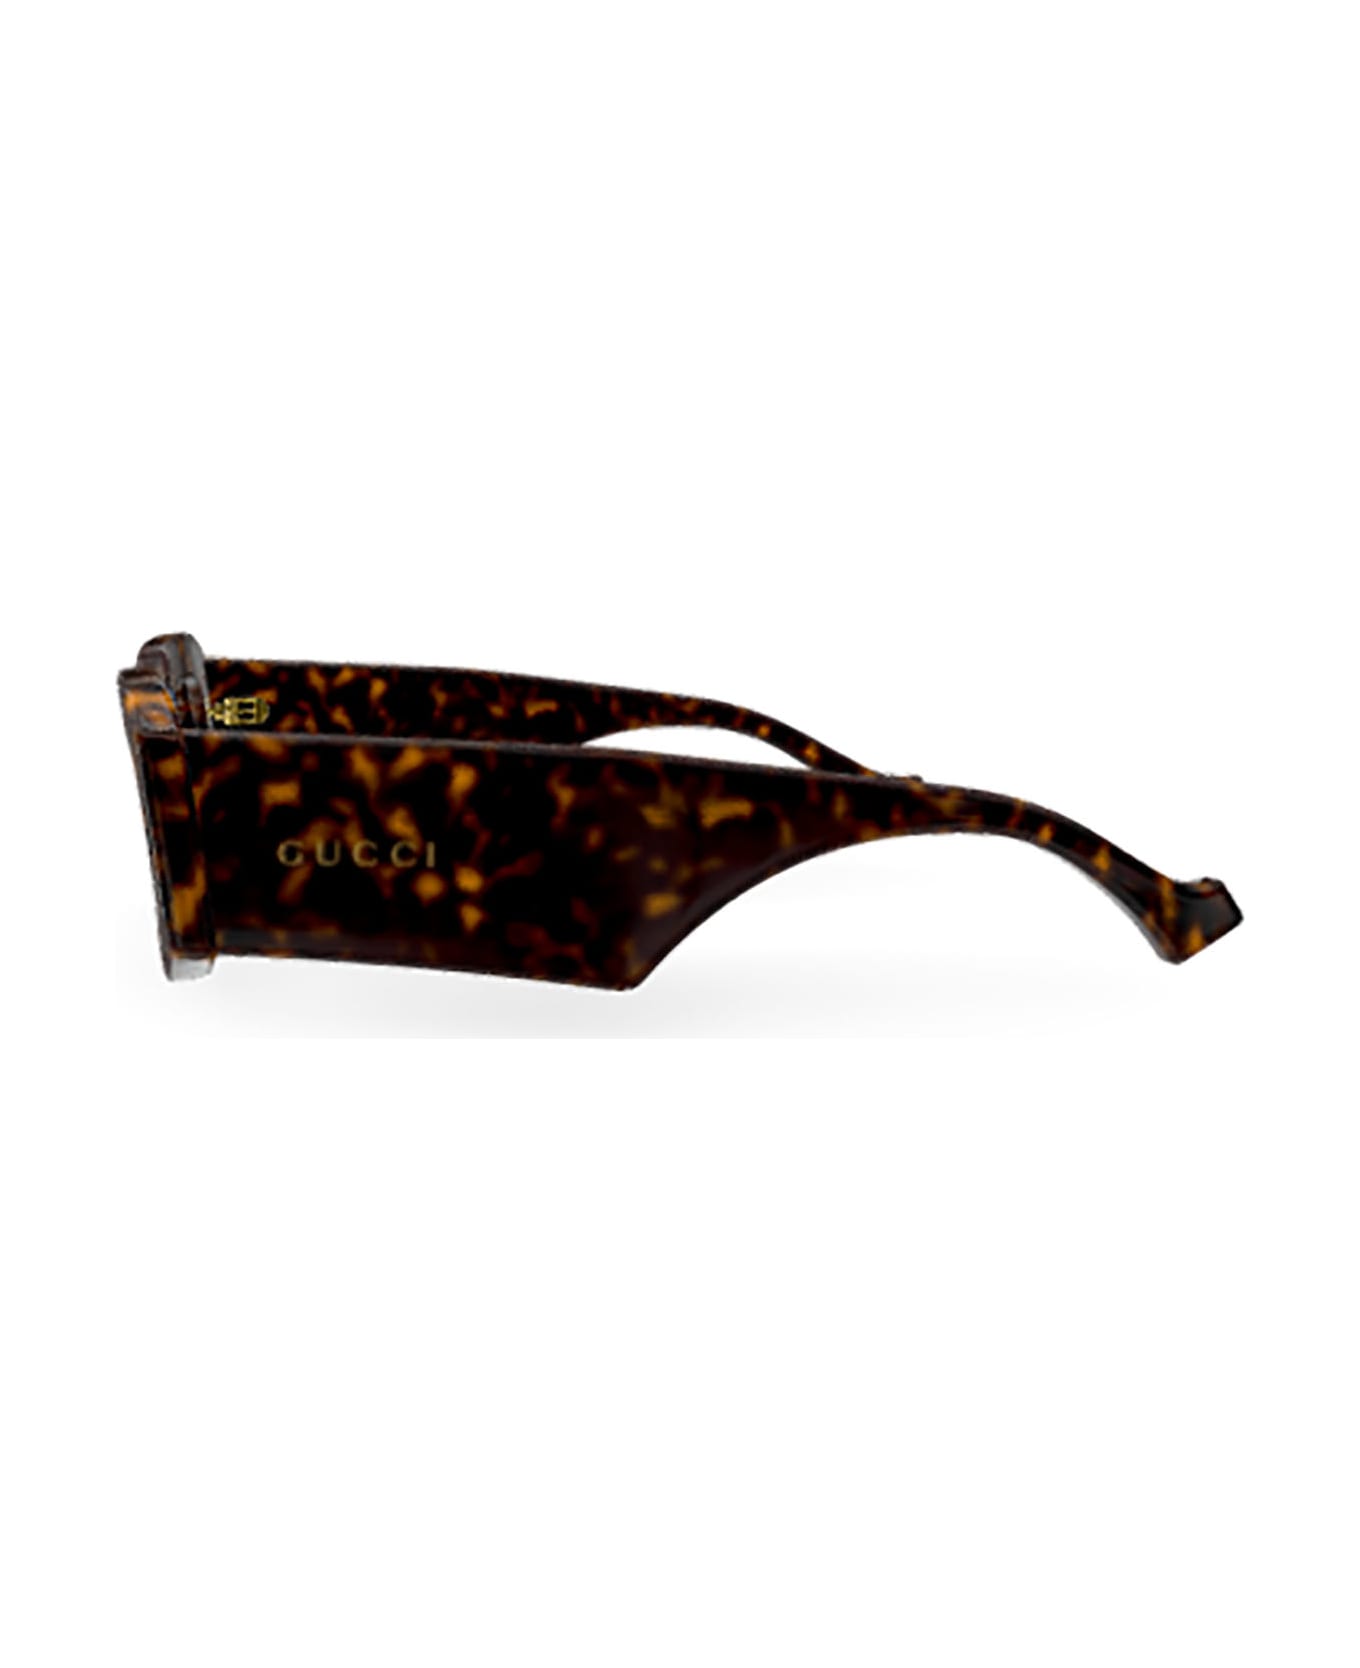 Gucci Eyewear GG1426S Sunglasses - Havana Havana Brown サングラス